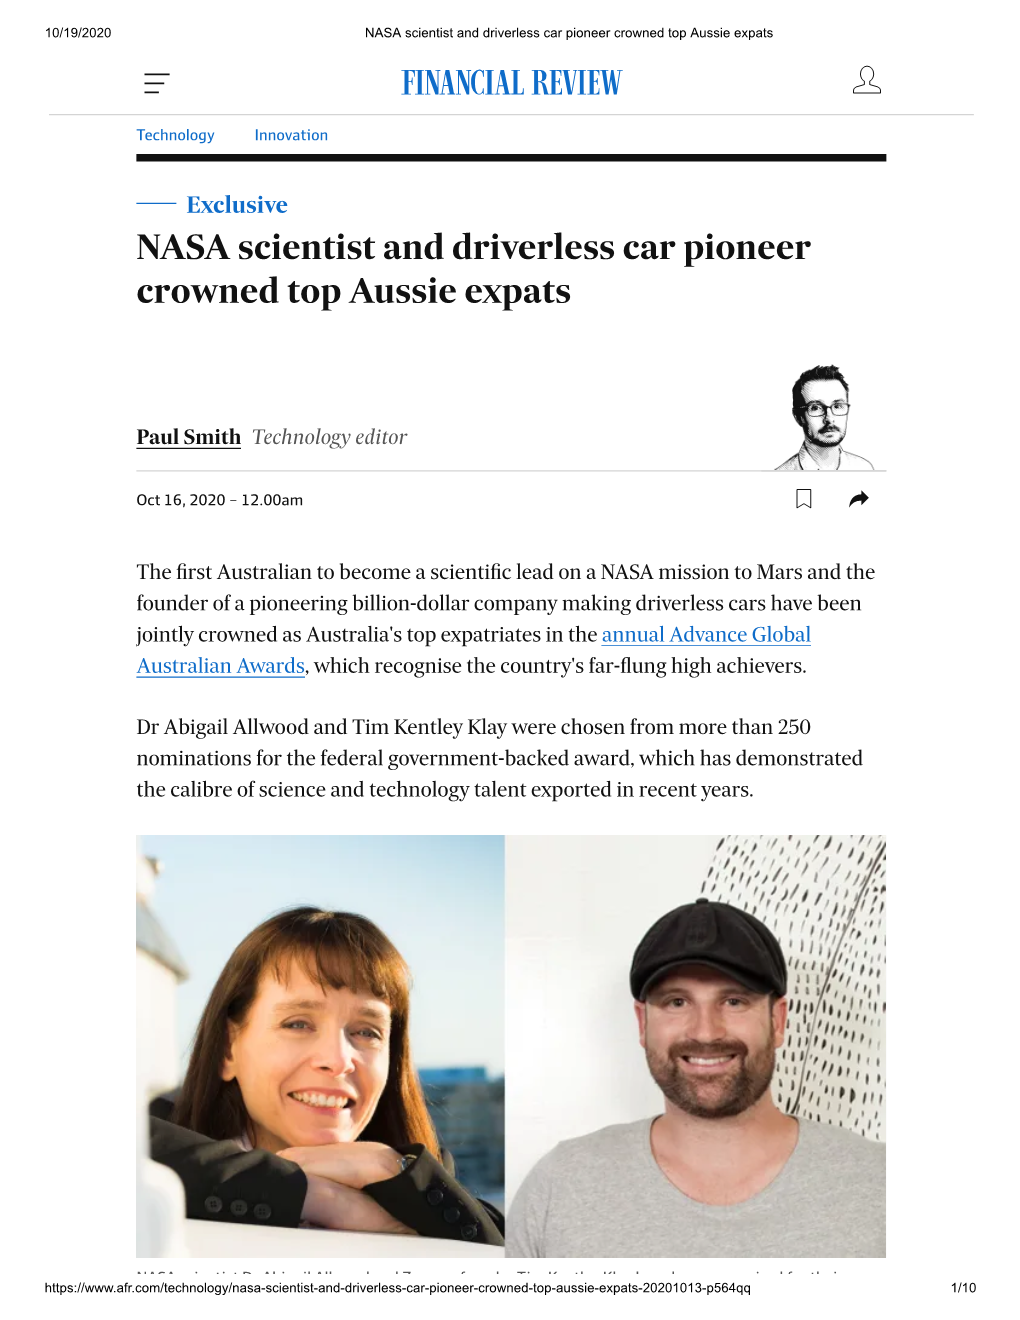 NASA Scientist and Driverless Car Pioneer Crowned Top Aussie Expats